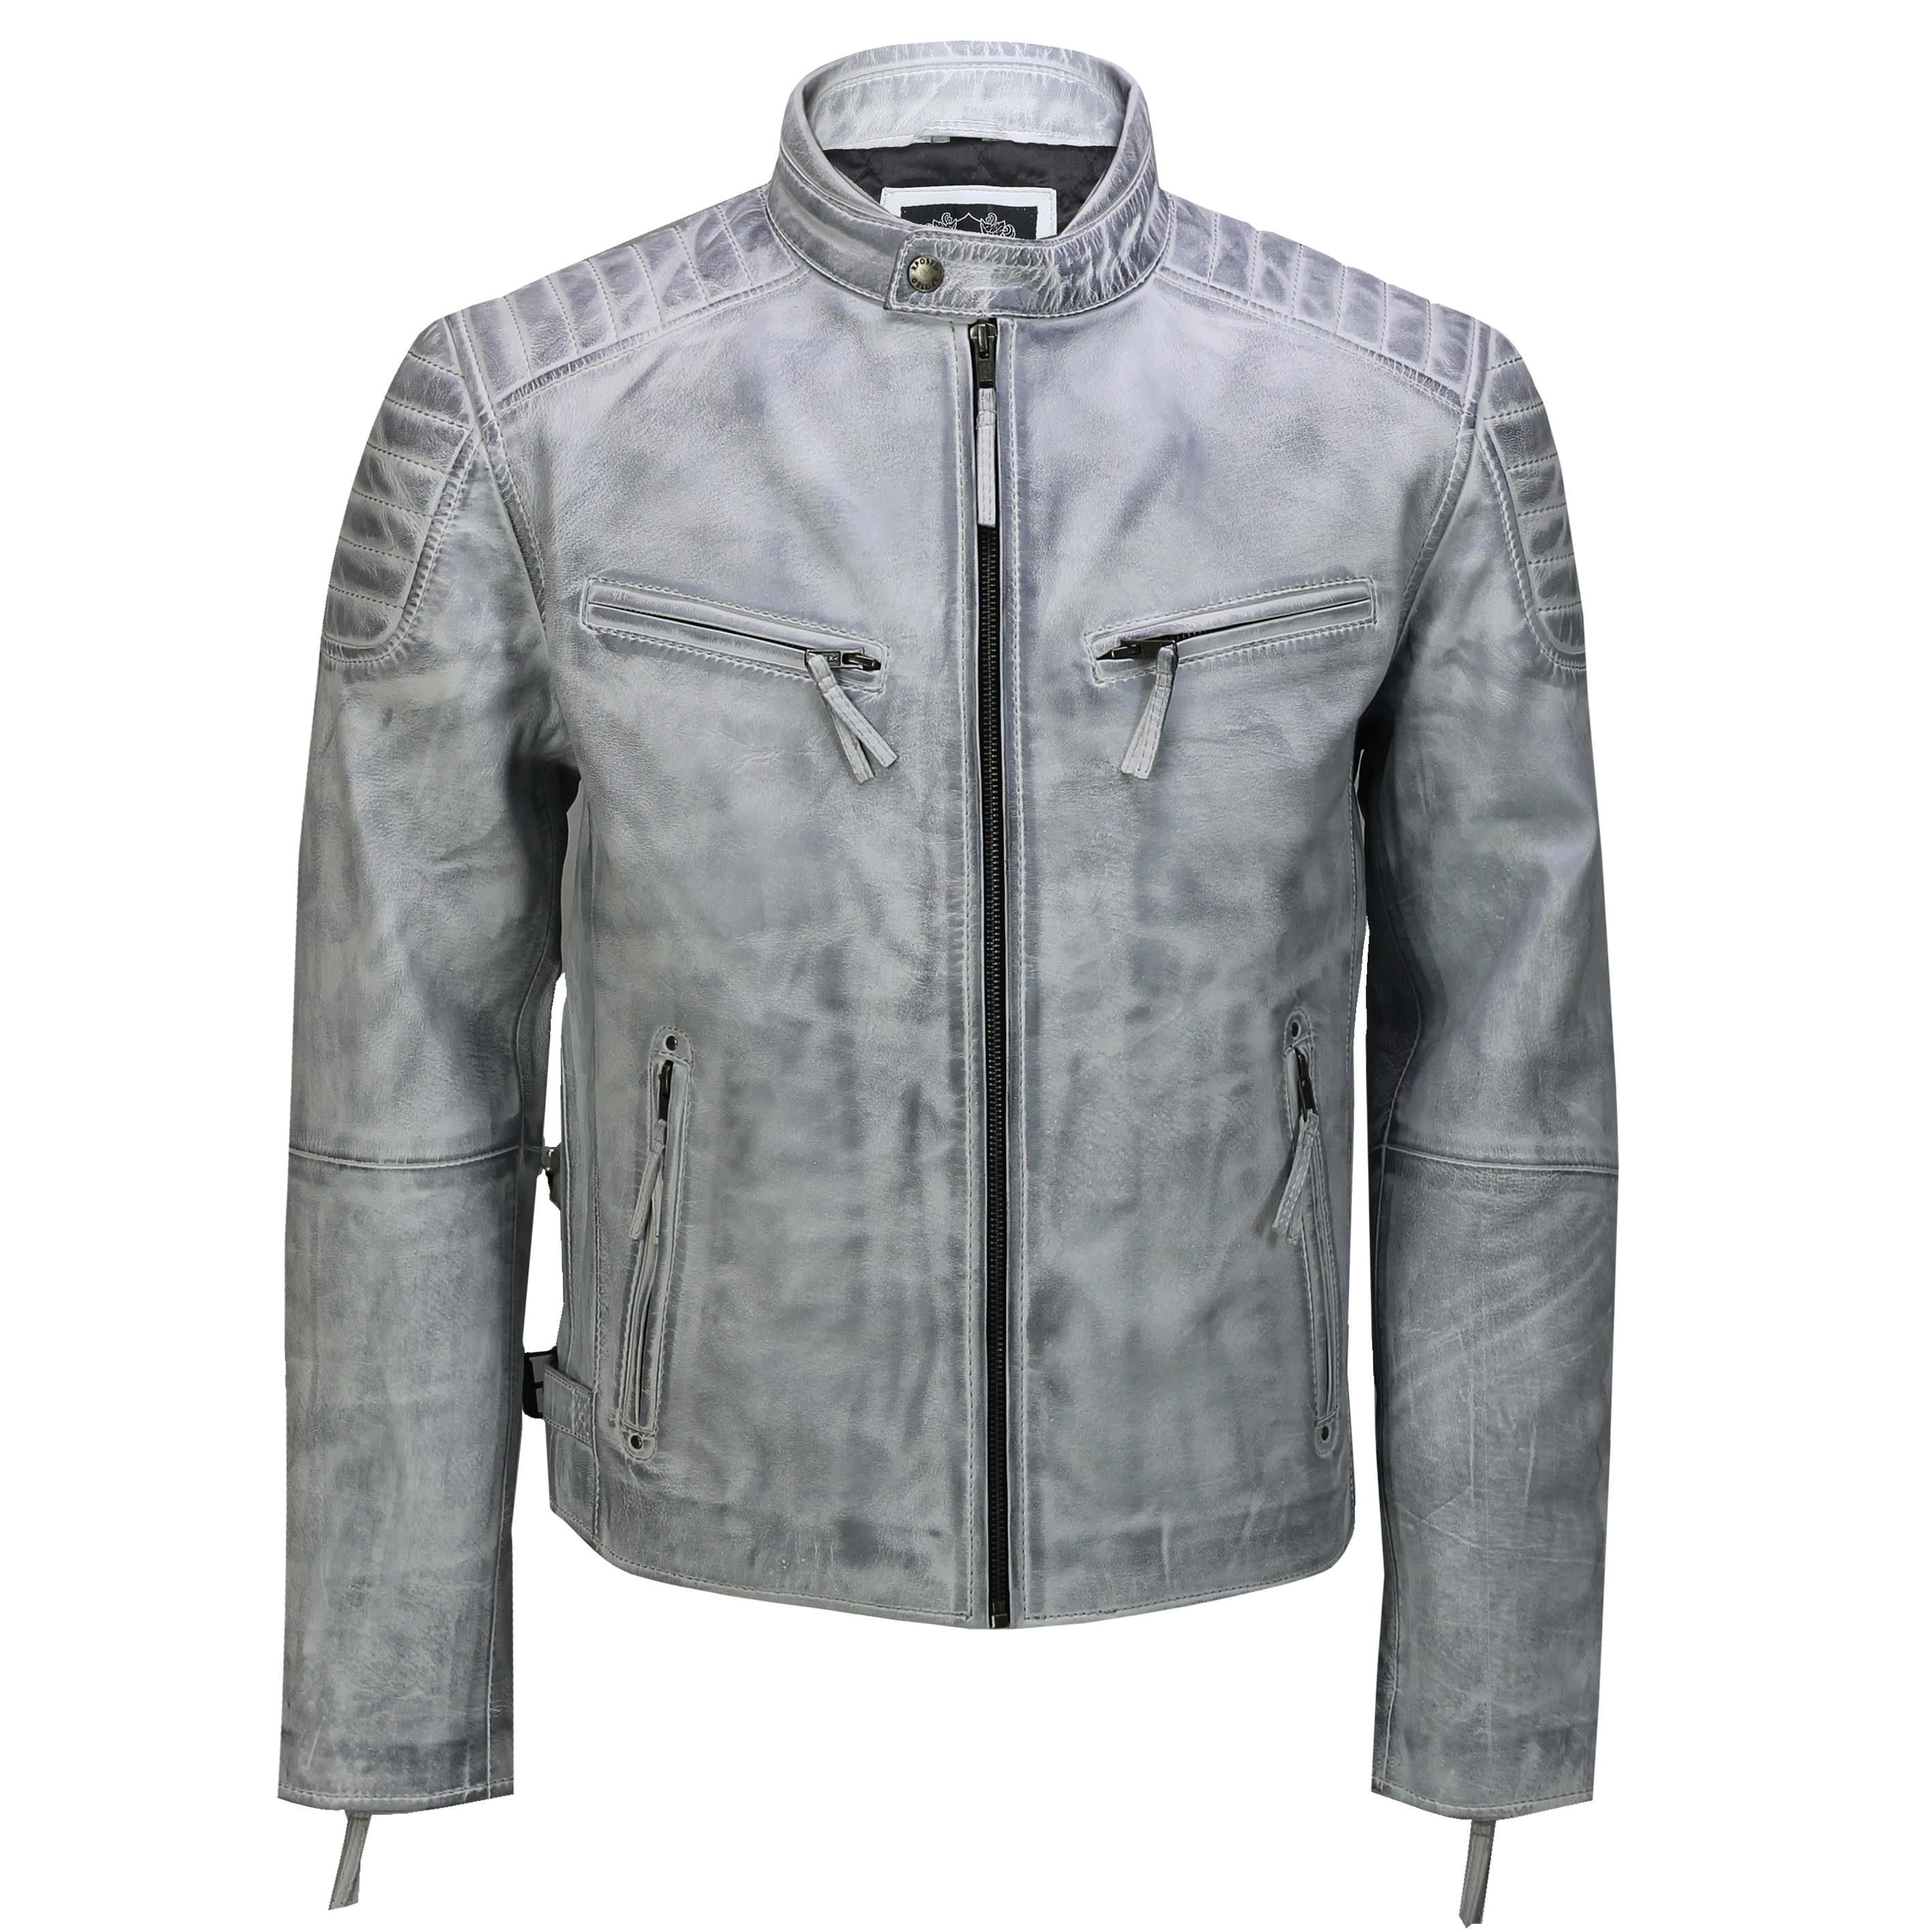 Fashion Leather Jackets | Finest Quality of Jackets - 3AMOTO